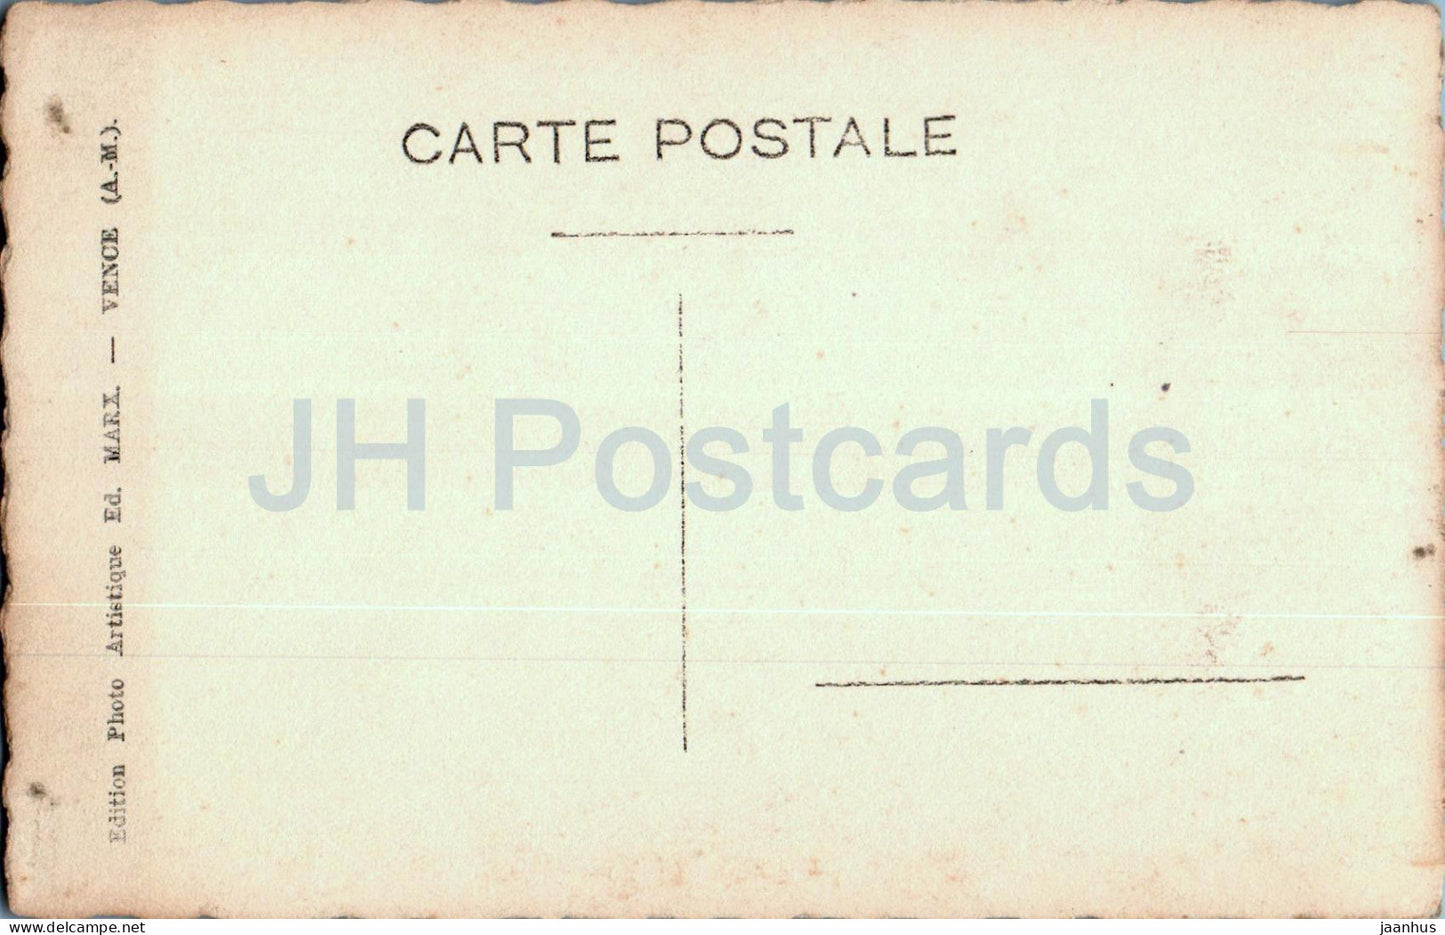 Vence - Straßen - 3 - Ed Marx - alte Postkarte - Frankreich - unbenutzt 